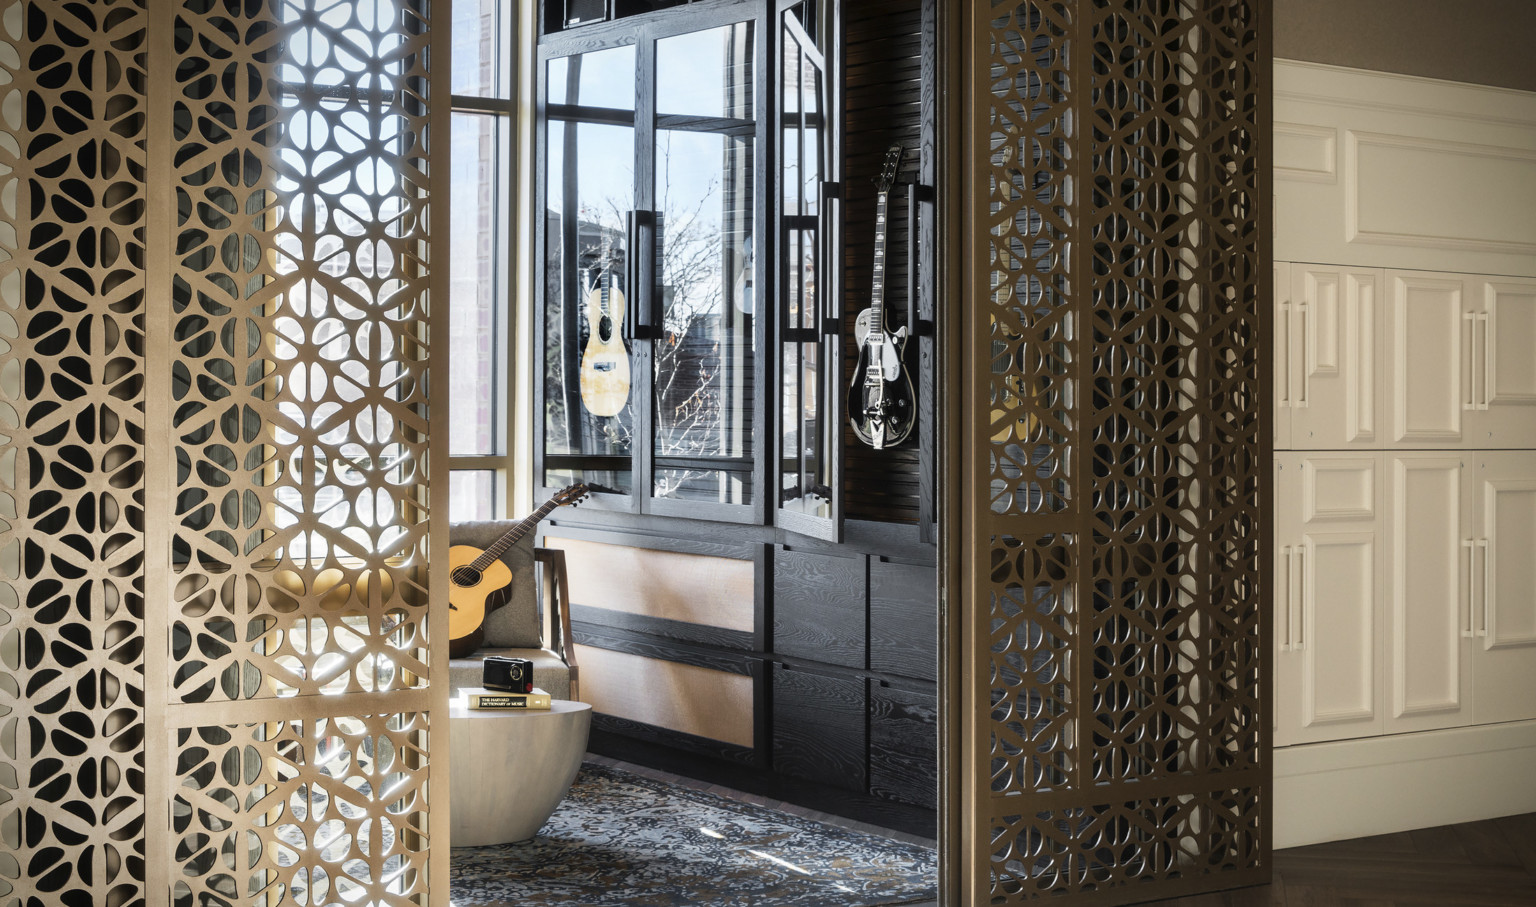 Organic shaped translucent metallic doorframe wraps around opening to room with black, glass door cabinet holding guitars